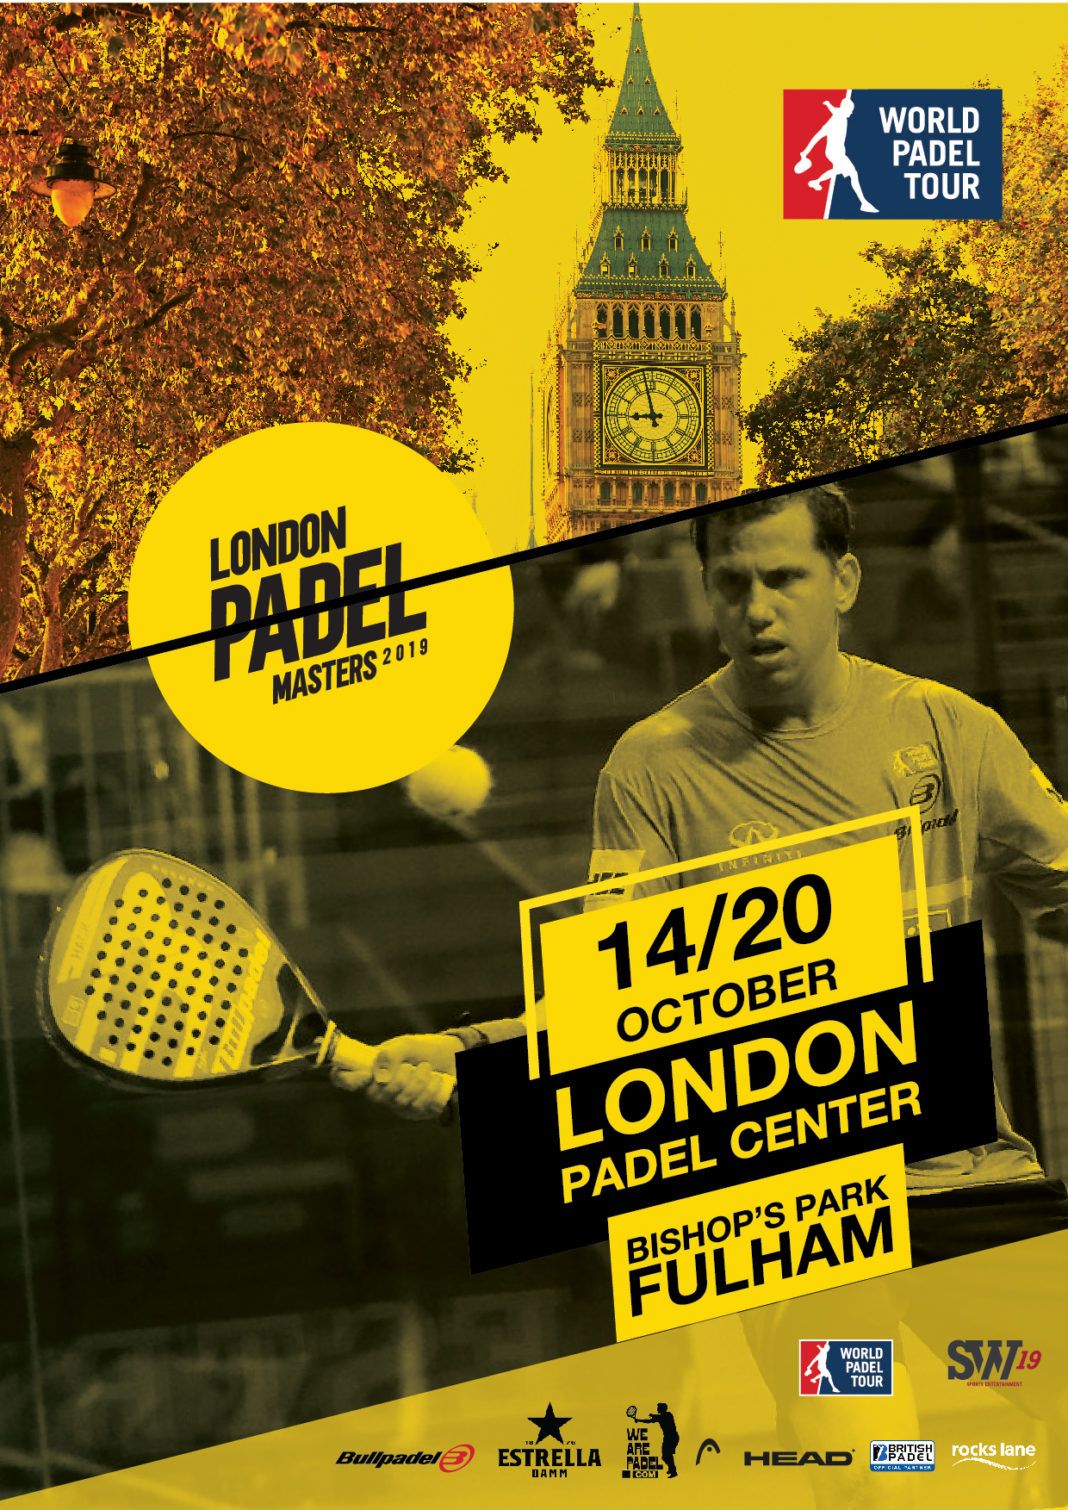 De poster van de London Master of the World Padel Tour.